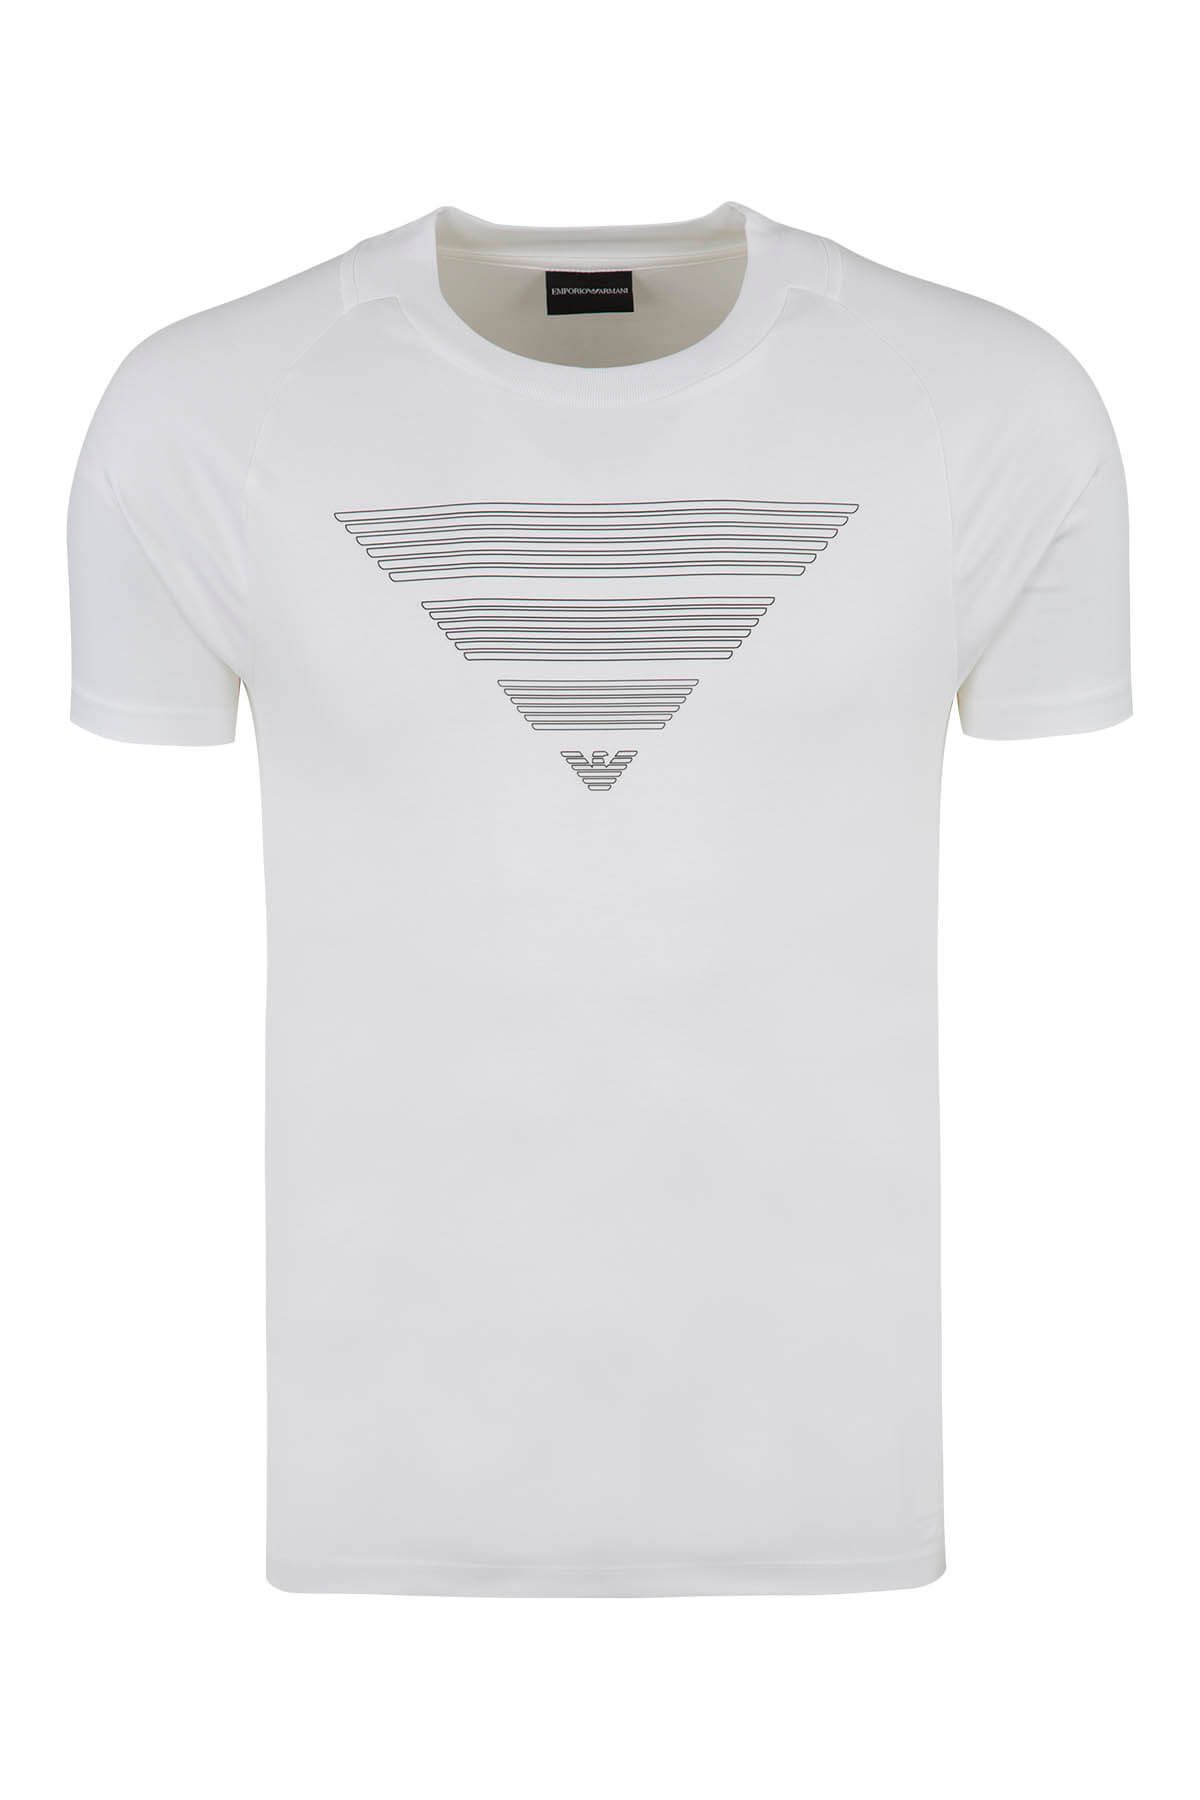 Emporio Armani Erkek Beyaz T-Shirt 3Z1T71 1Jprz 0100